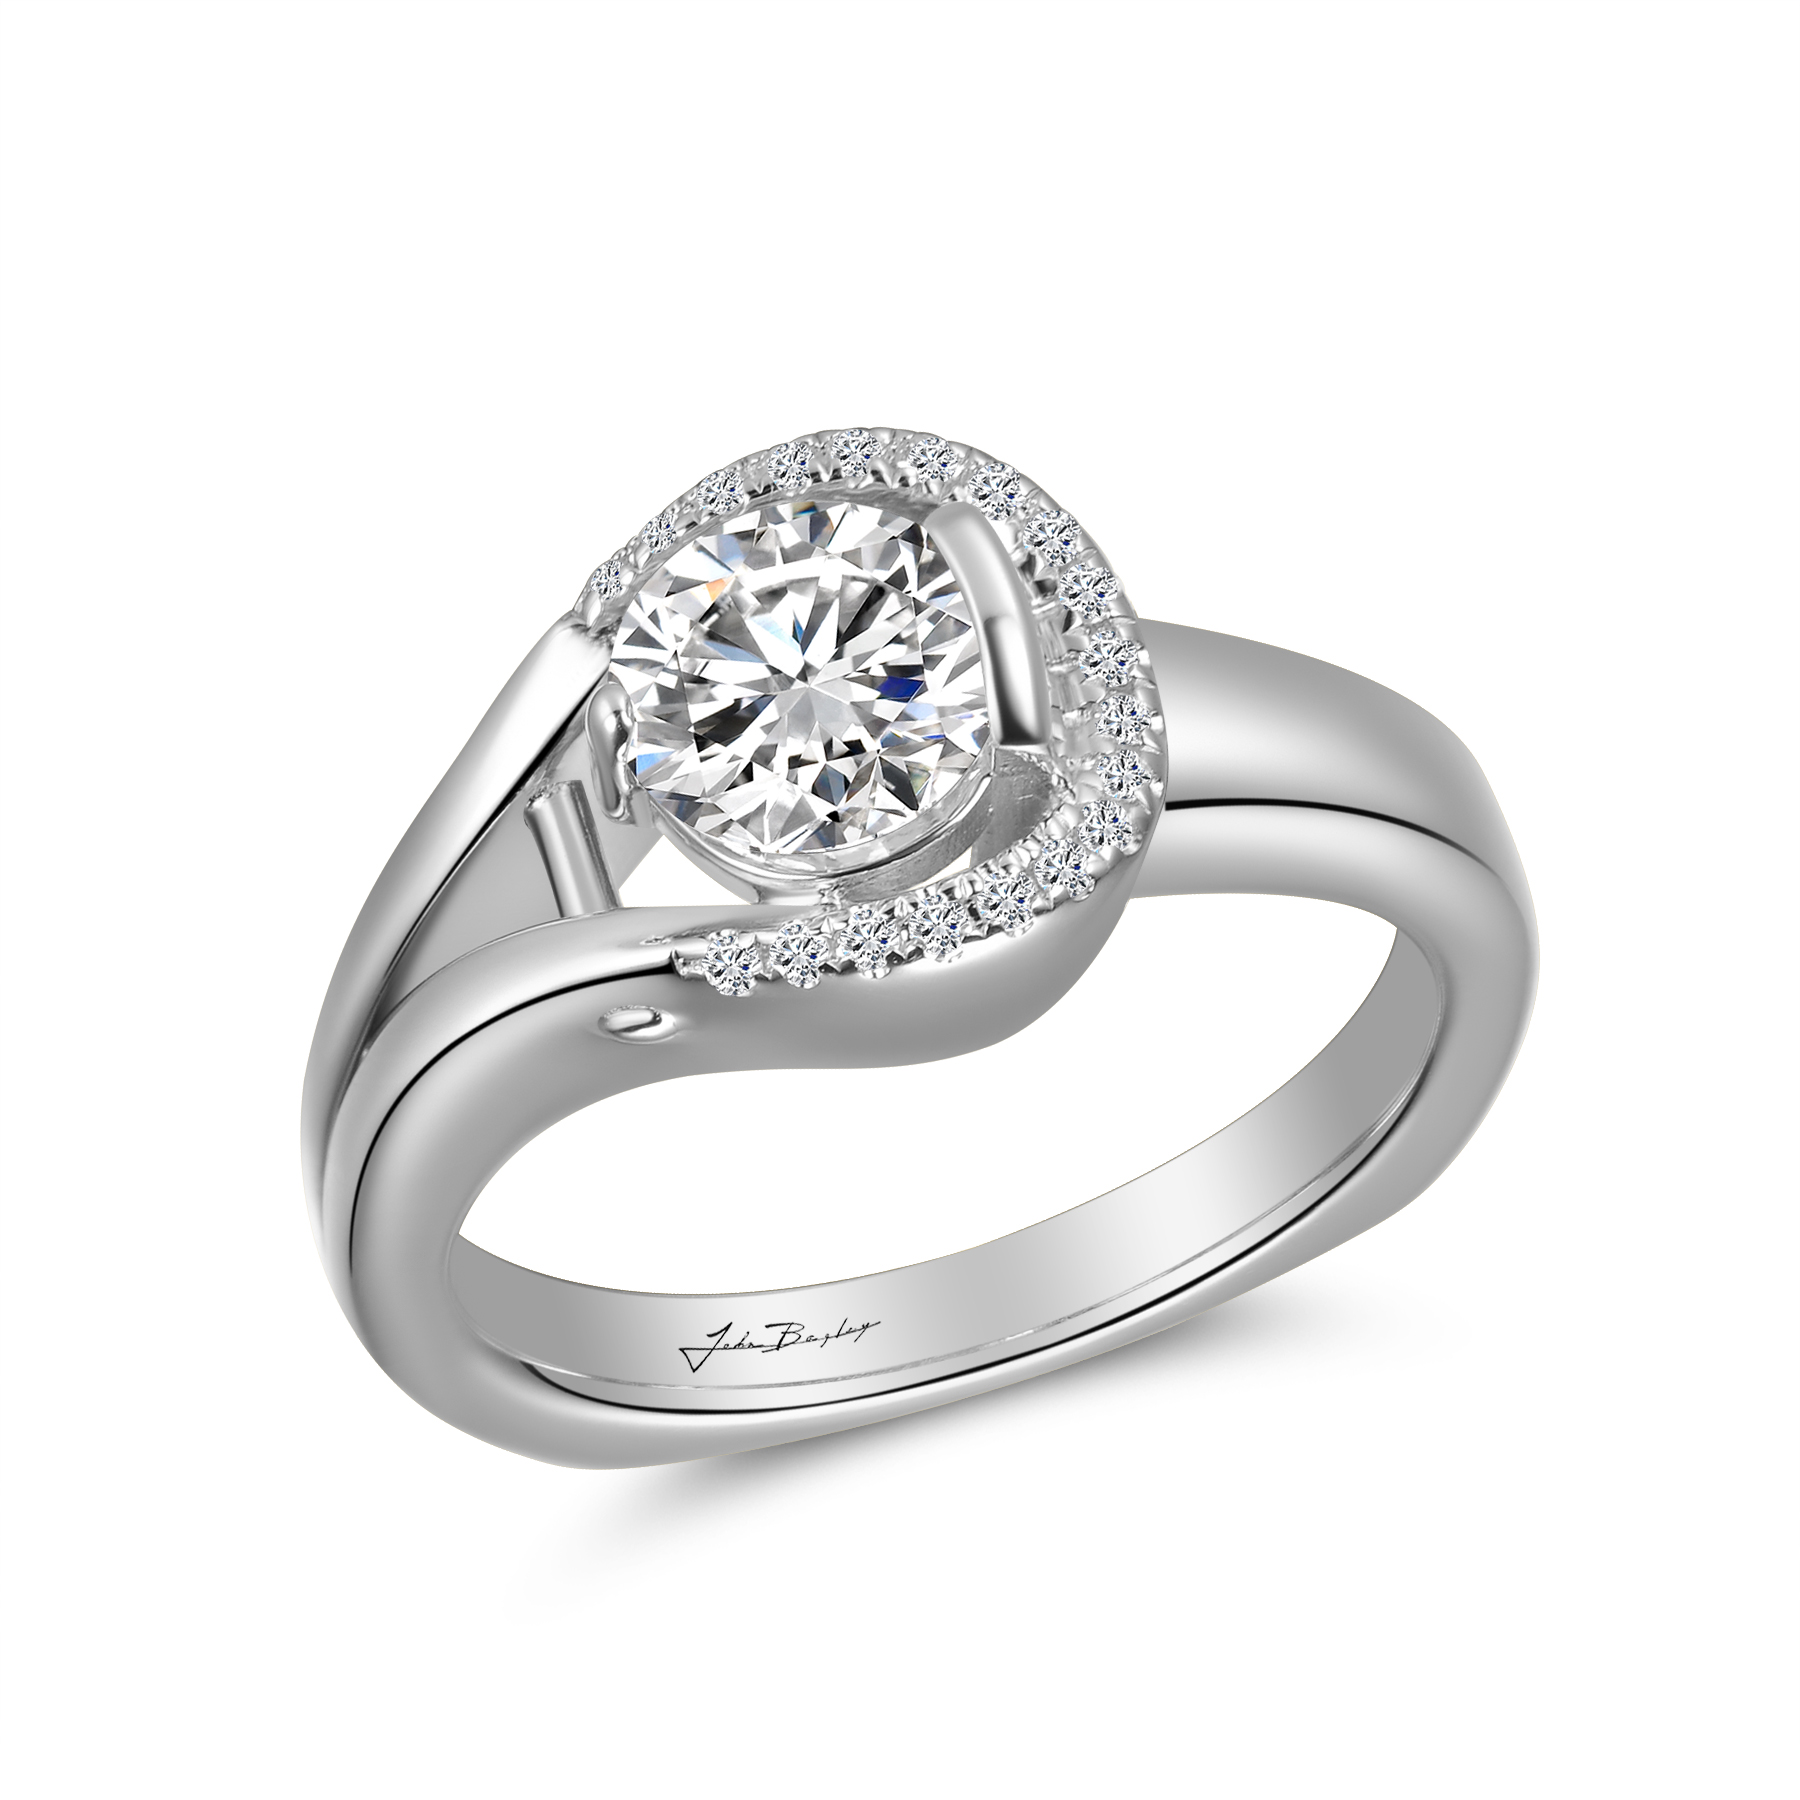 White Engagement Ring